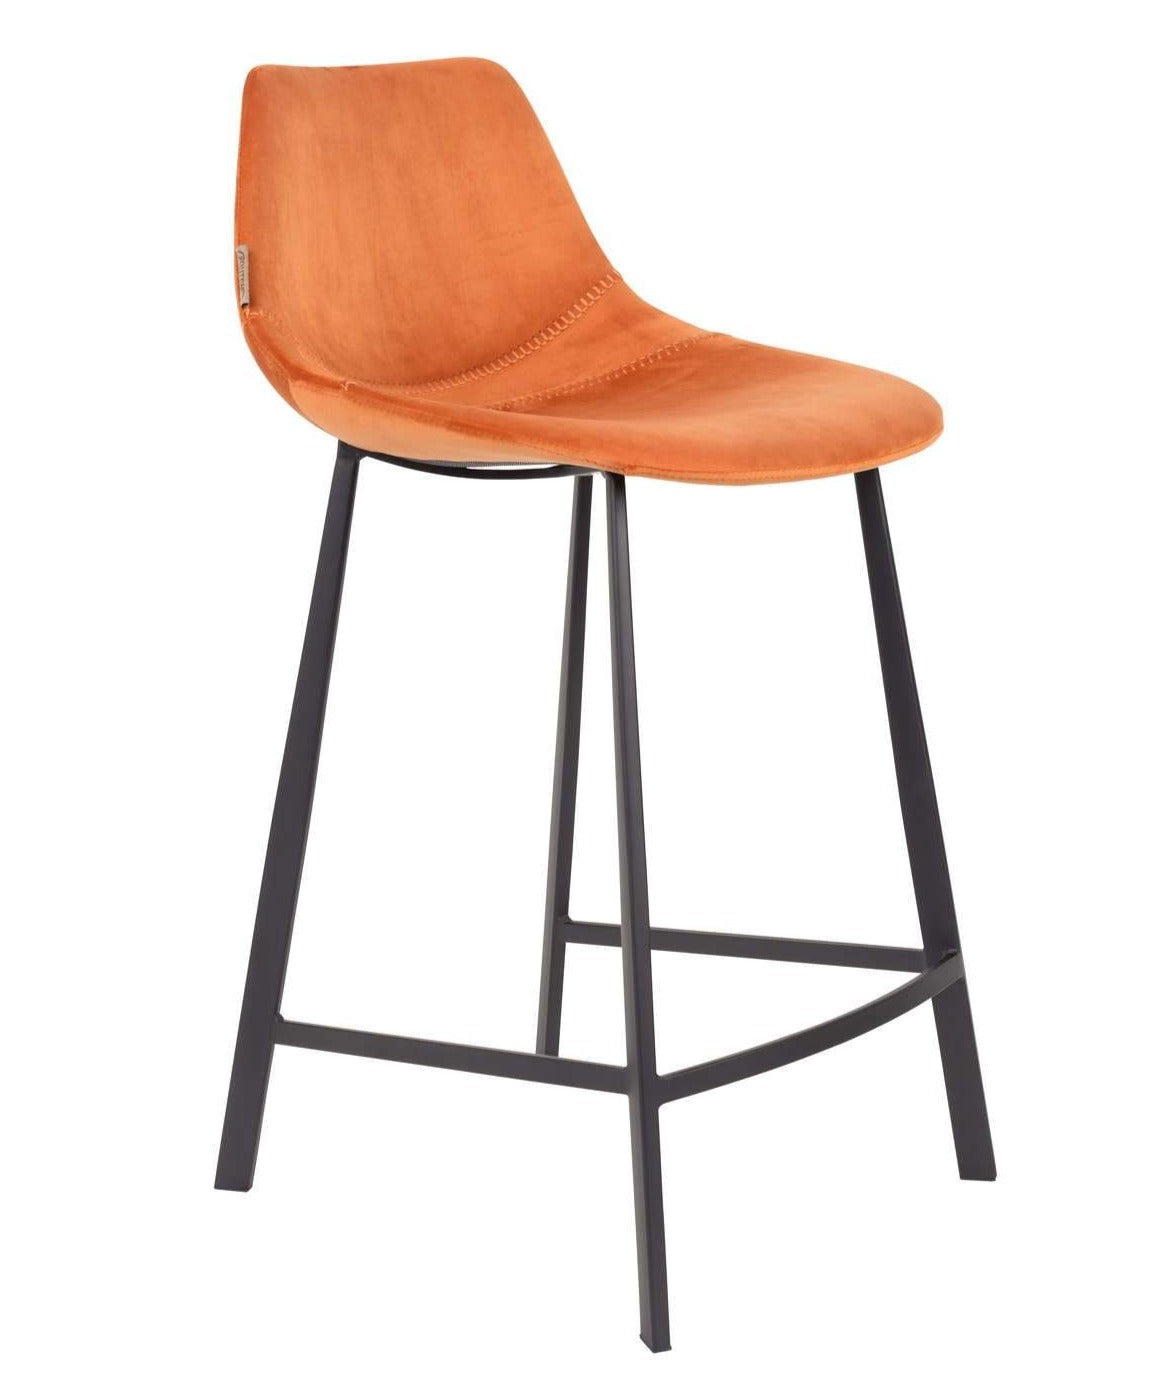 FRANKY bar chair orange, Dutchbone, Eye on Design